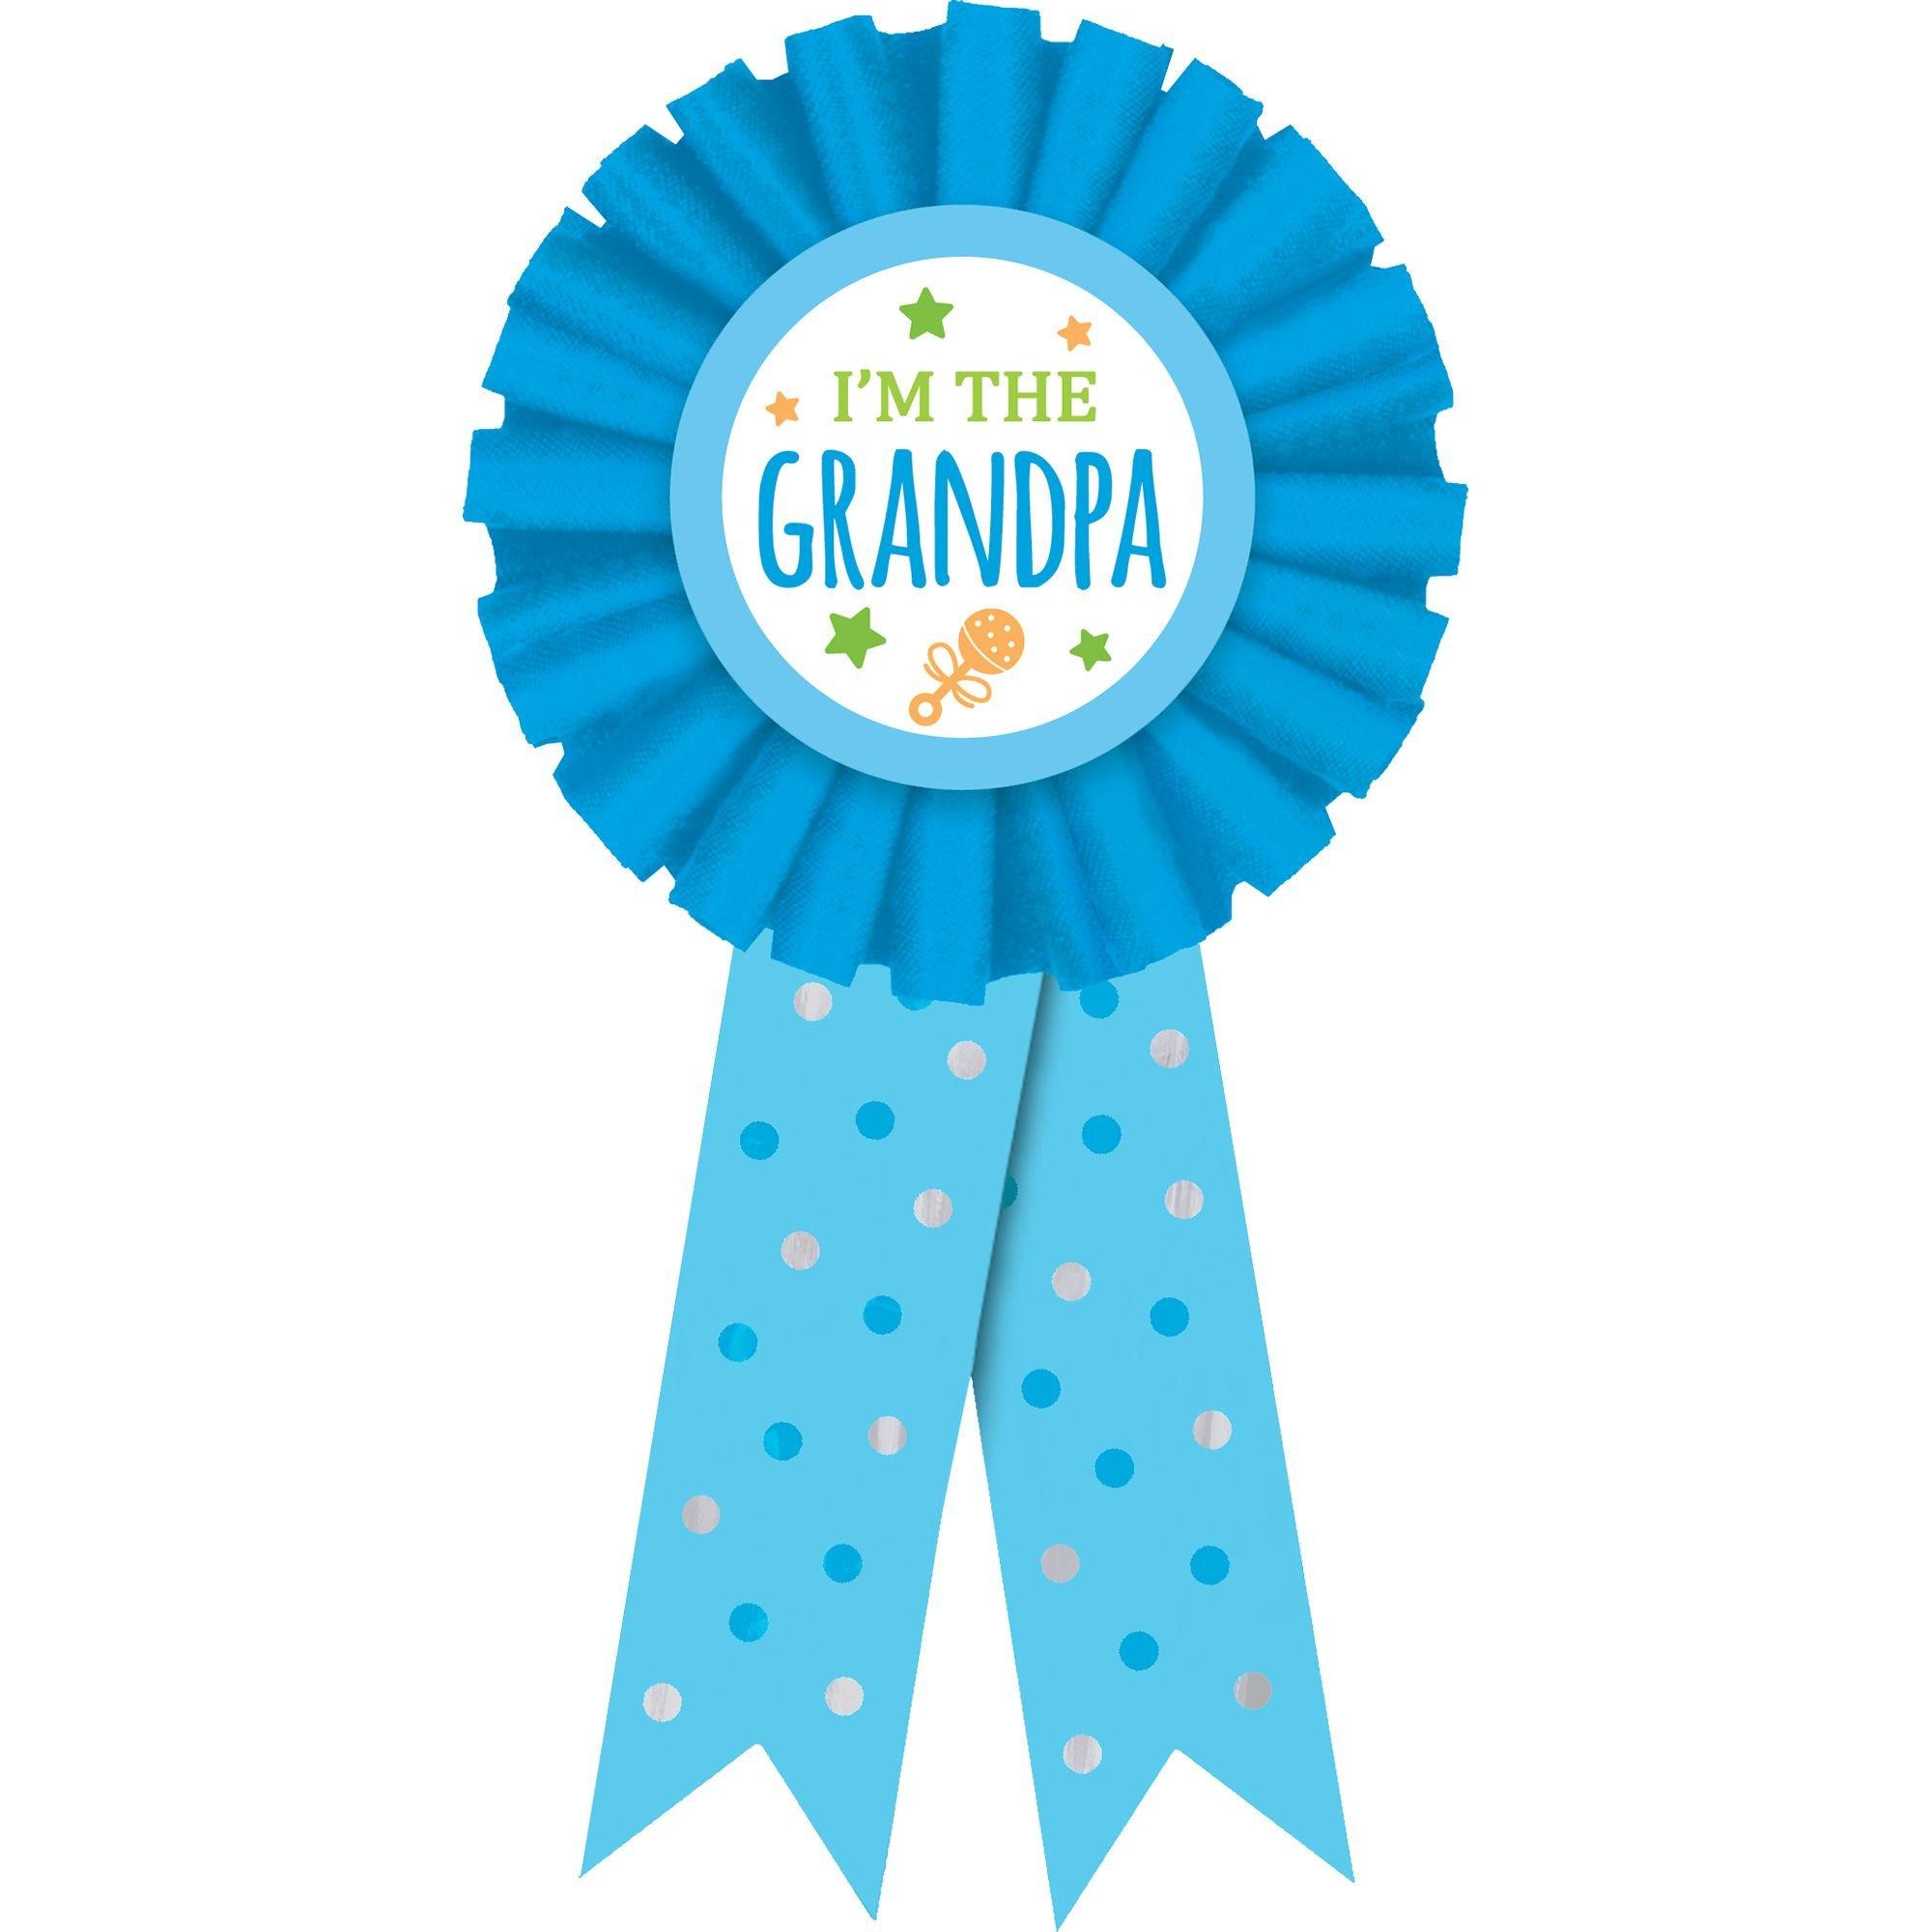 I'm the Grandpa Award Ribbon